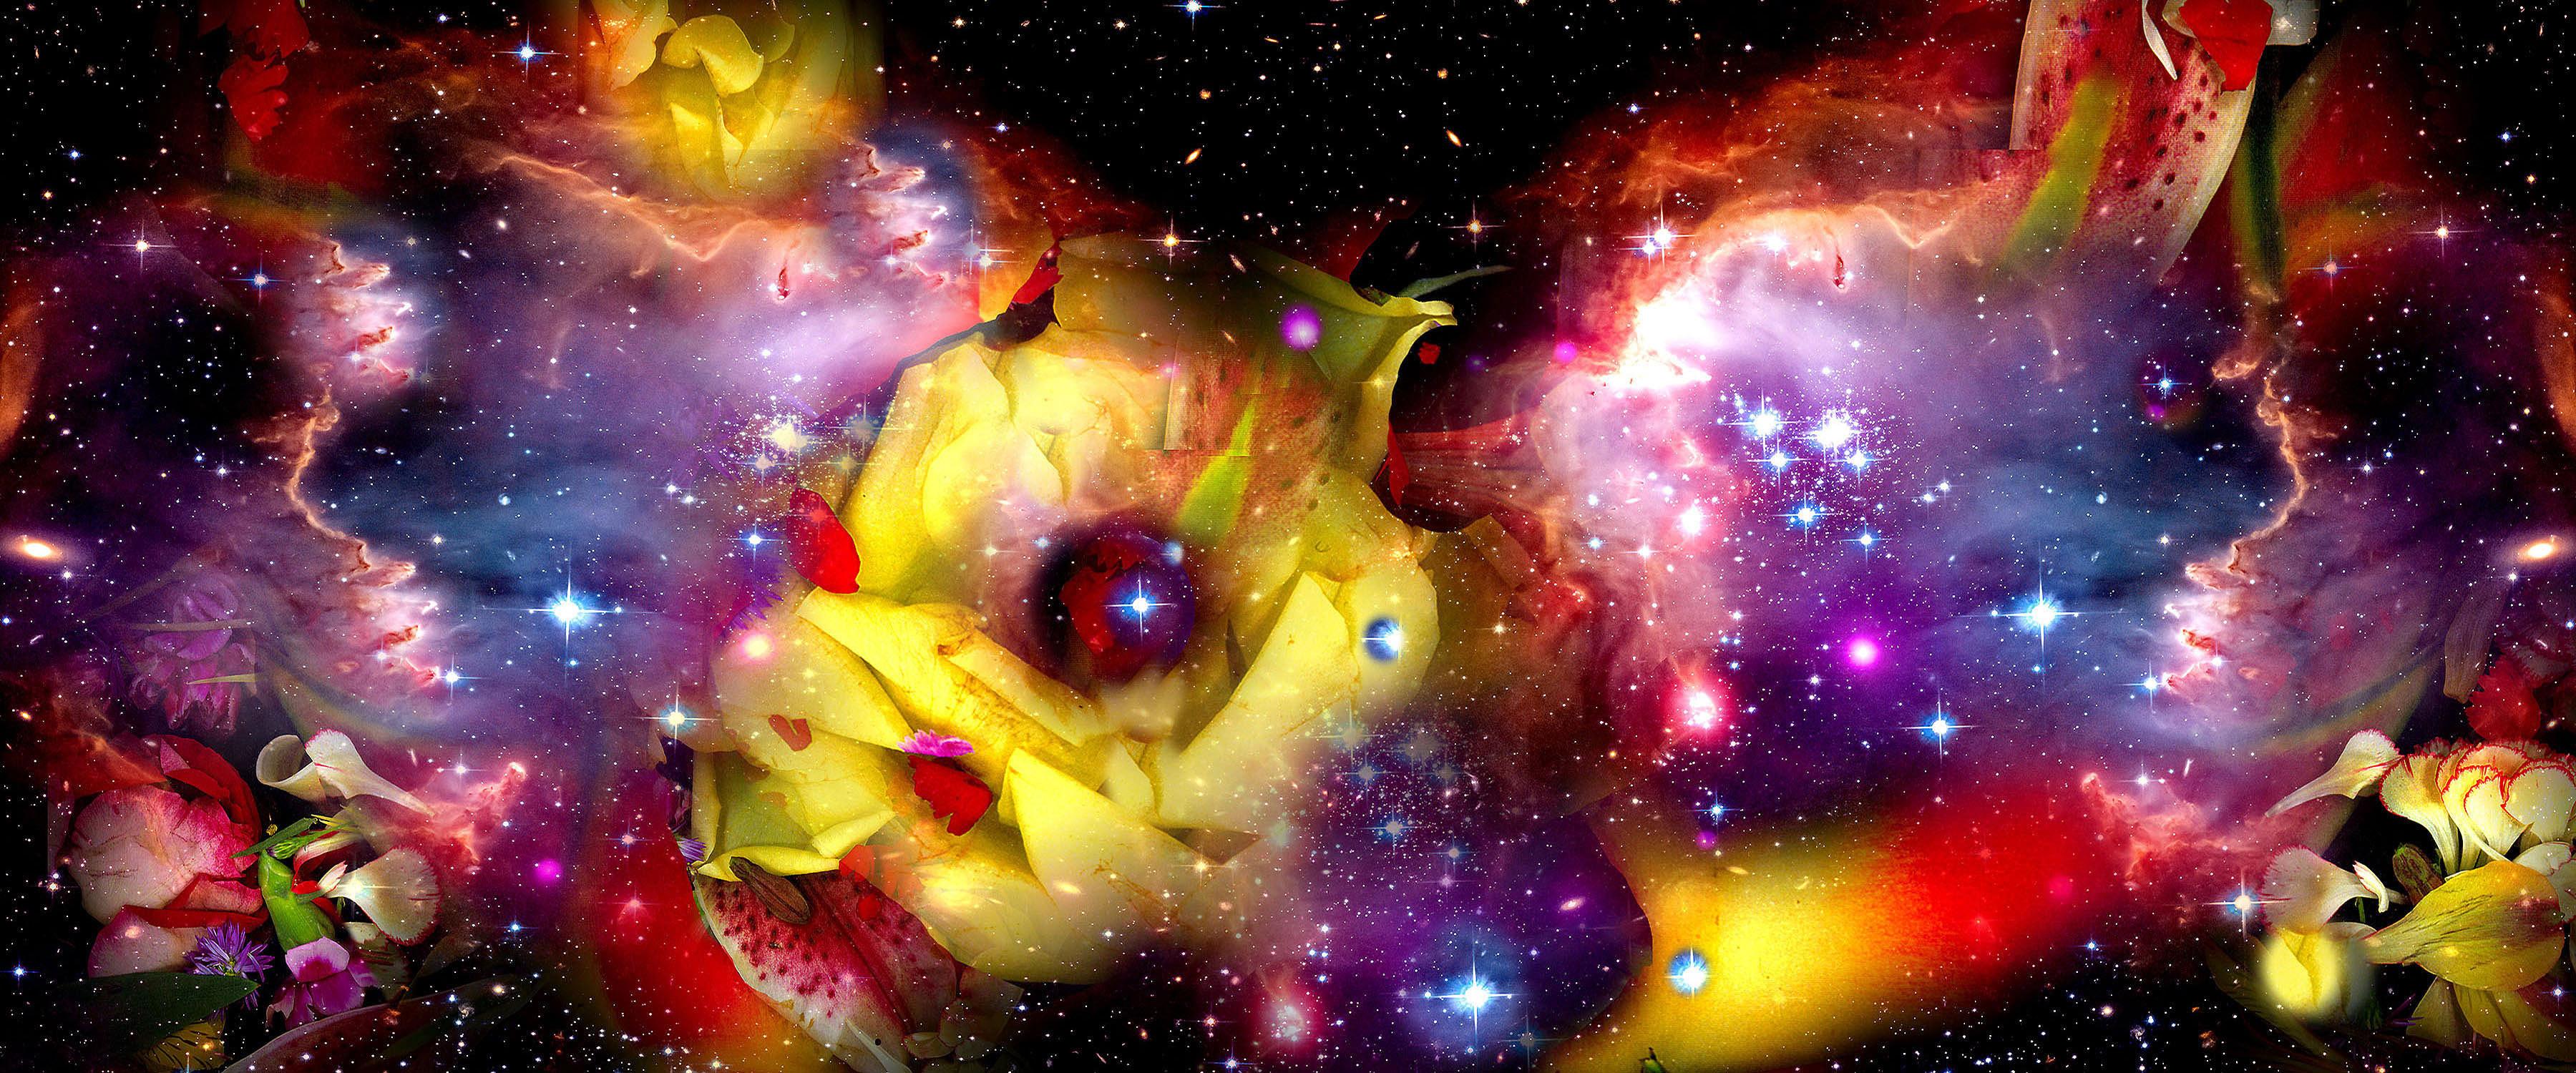 Gardens & Galaxies: Yellow Rose 24"42" bright color abstract sky nature panorama - Mixed Media Art by Susan Kaprov